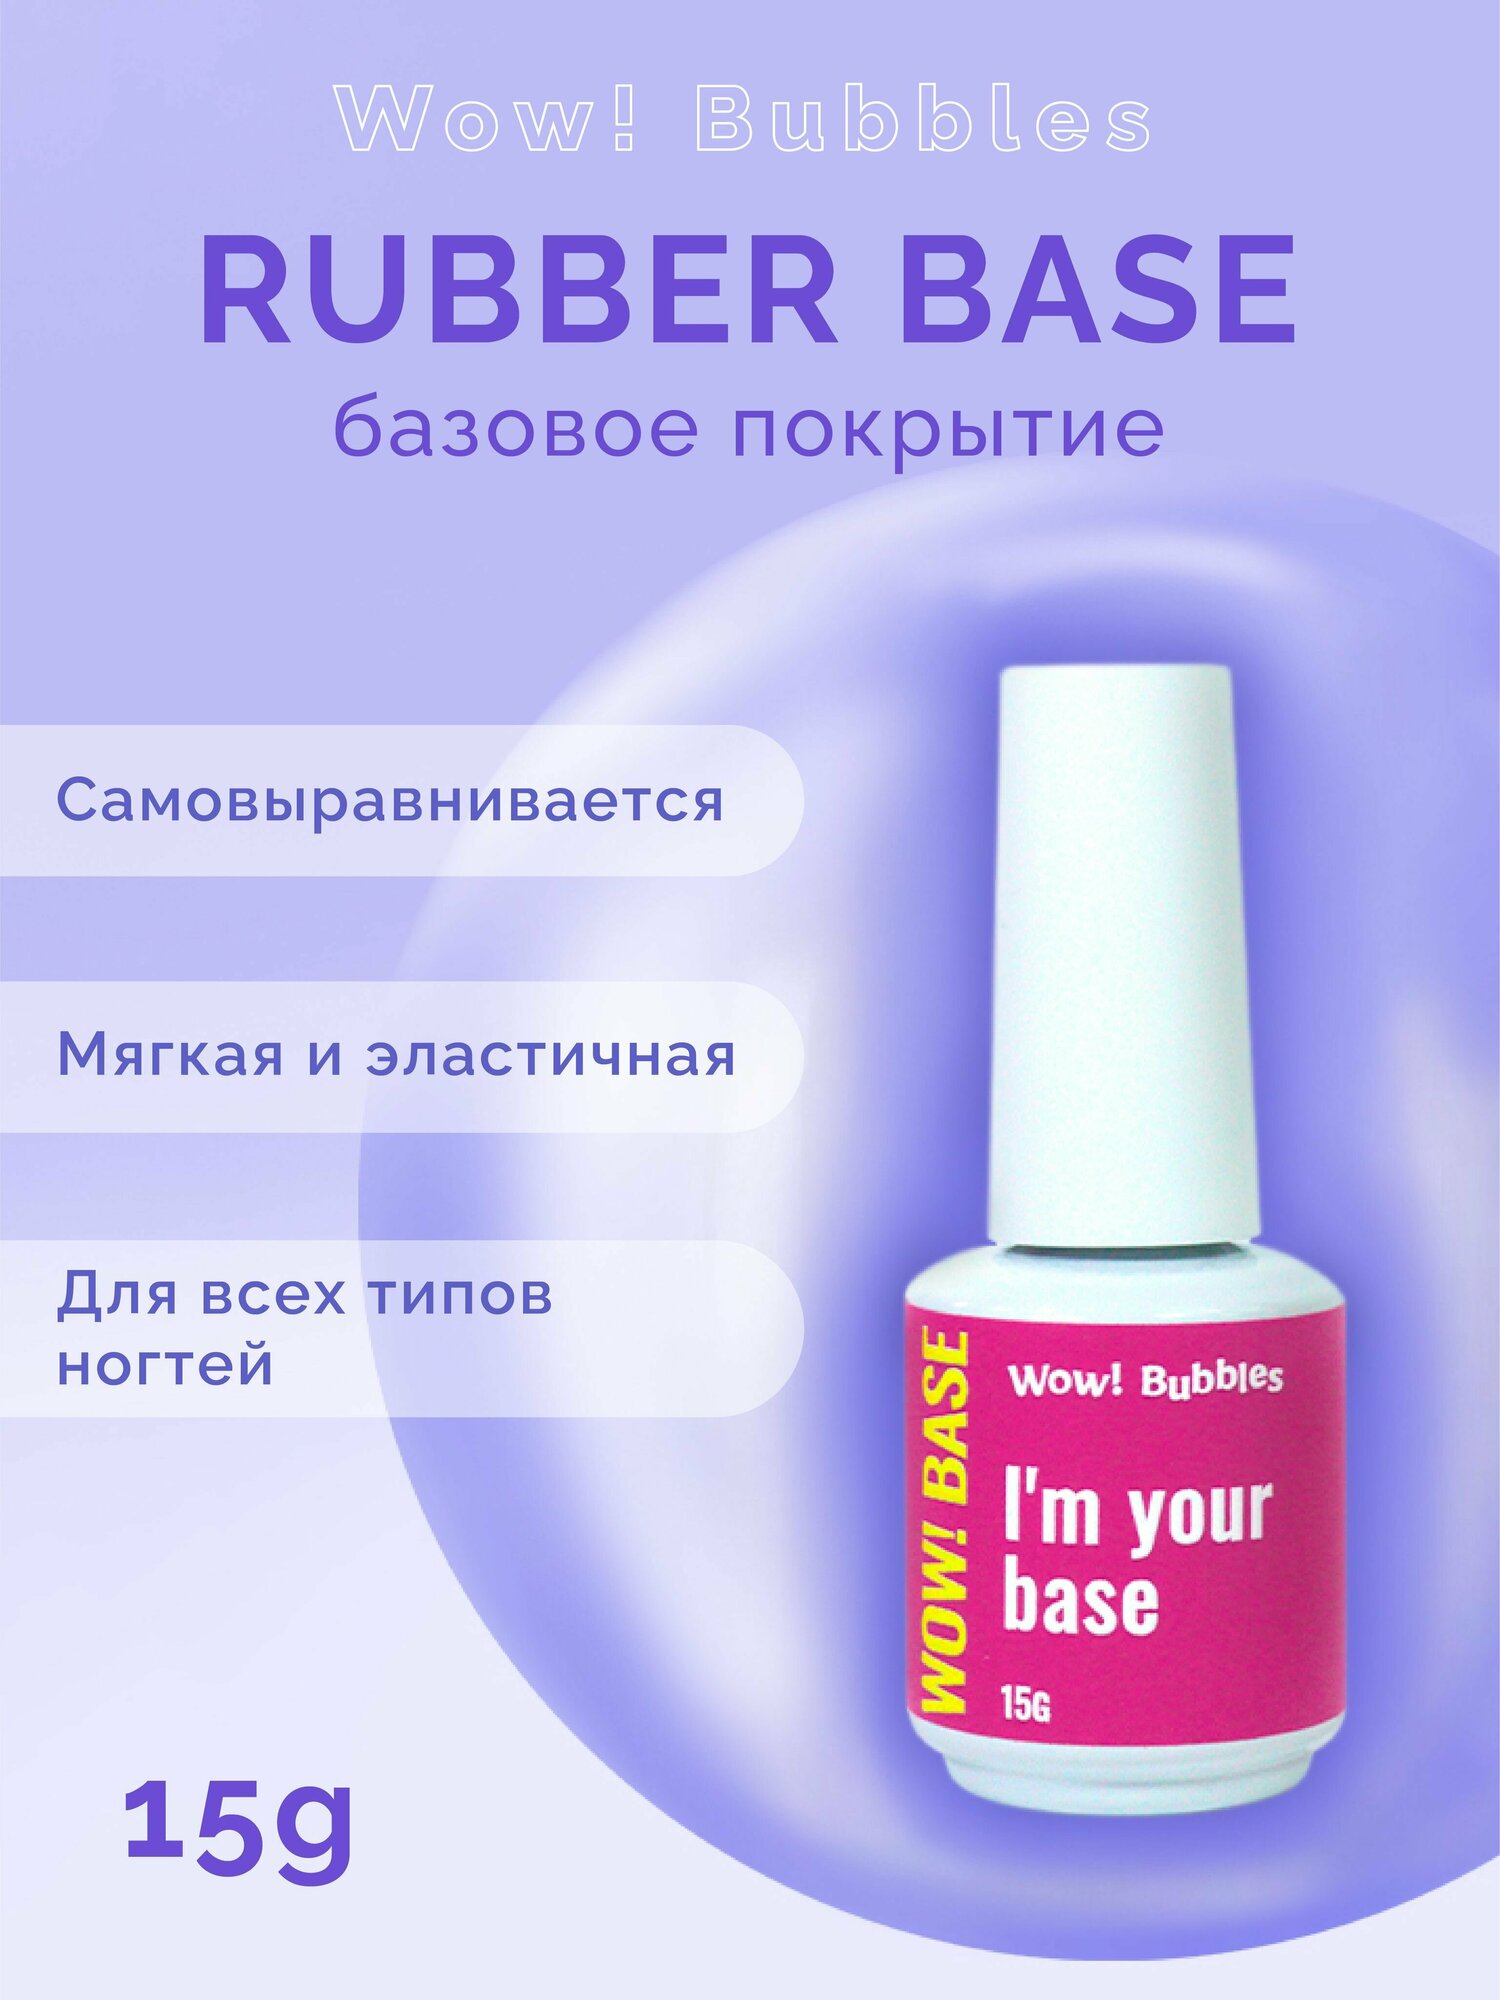 WOW! Bubbles Прозрачная база для ногтей / мягкая / эластичная Rubber Base 15g